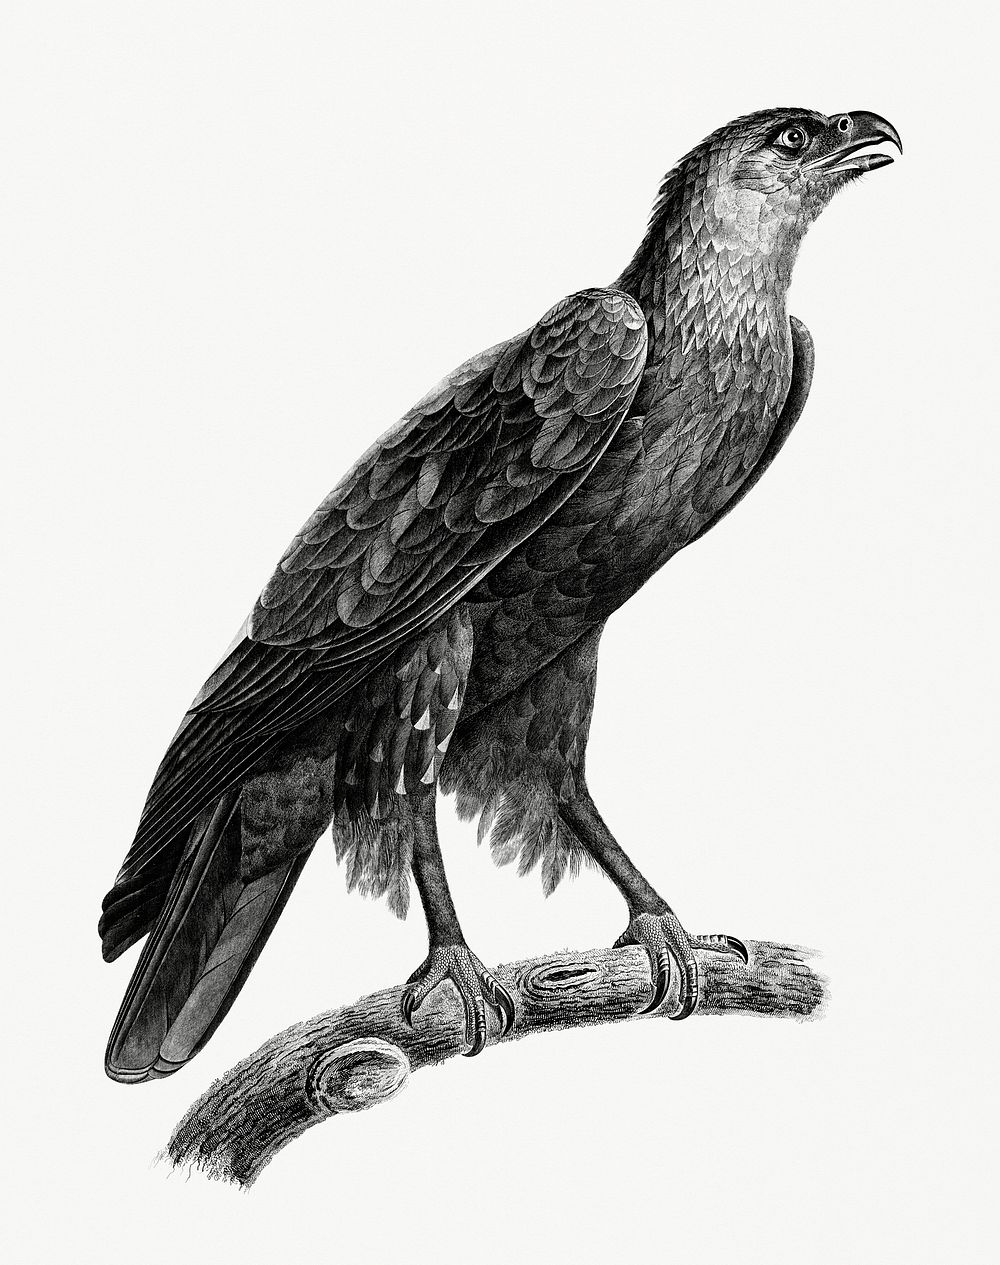 Vintage illustrations of eagle